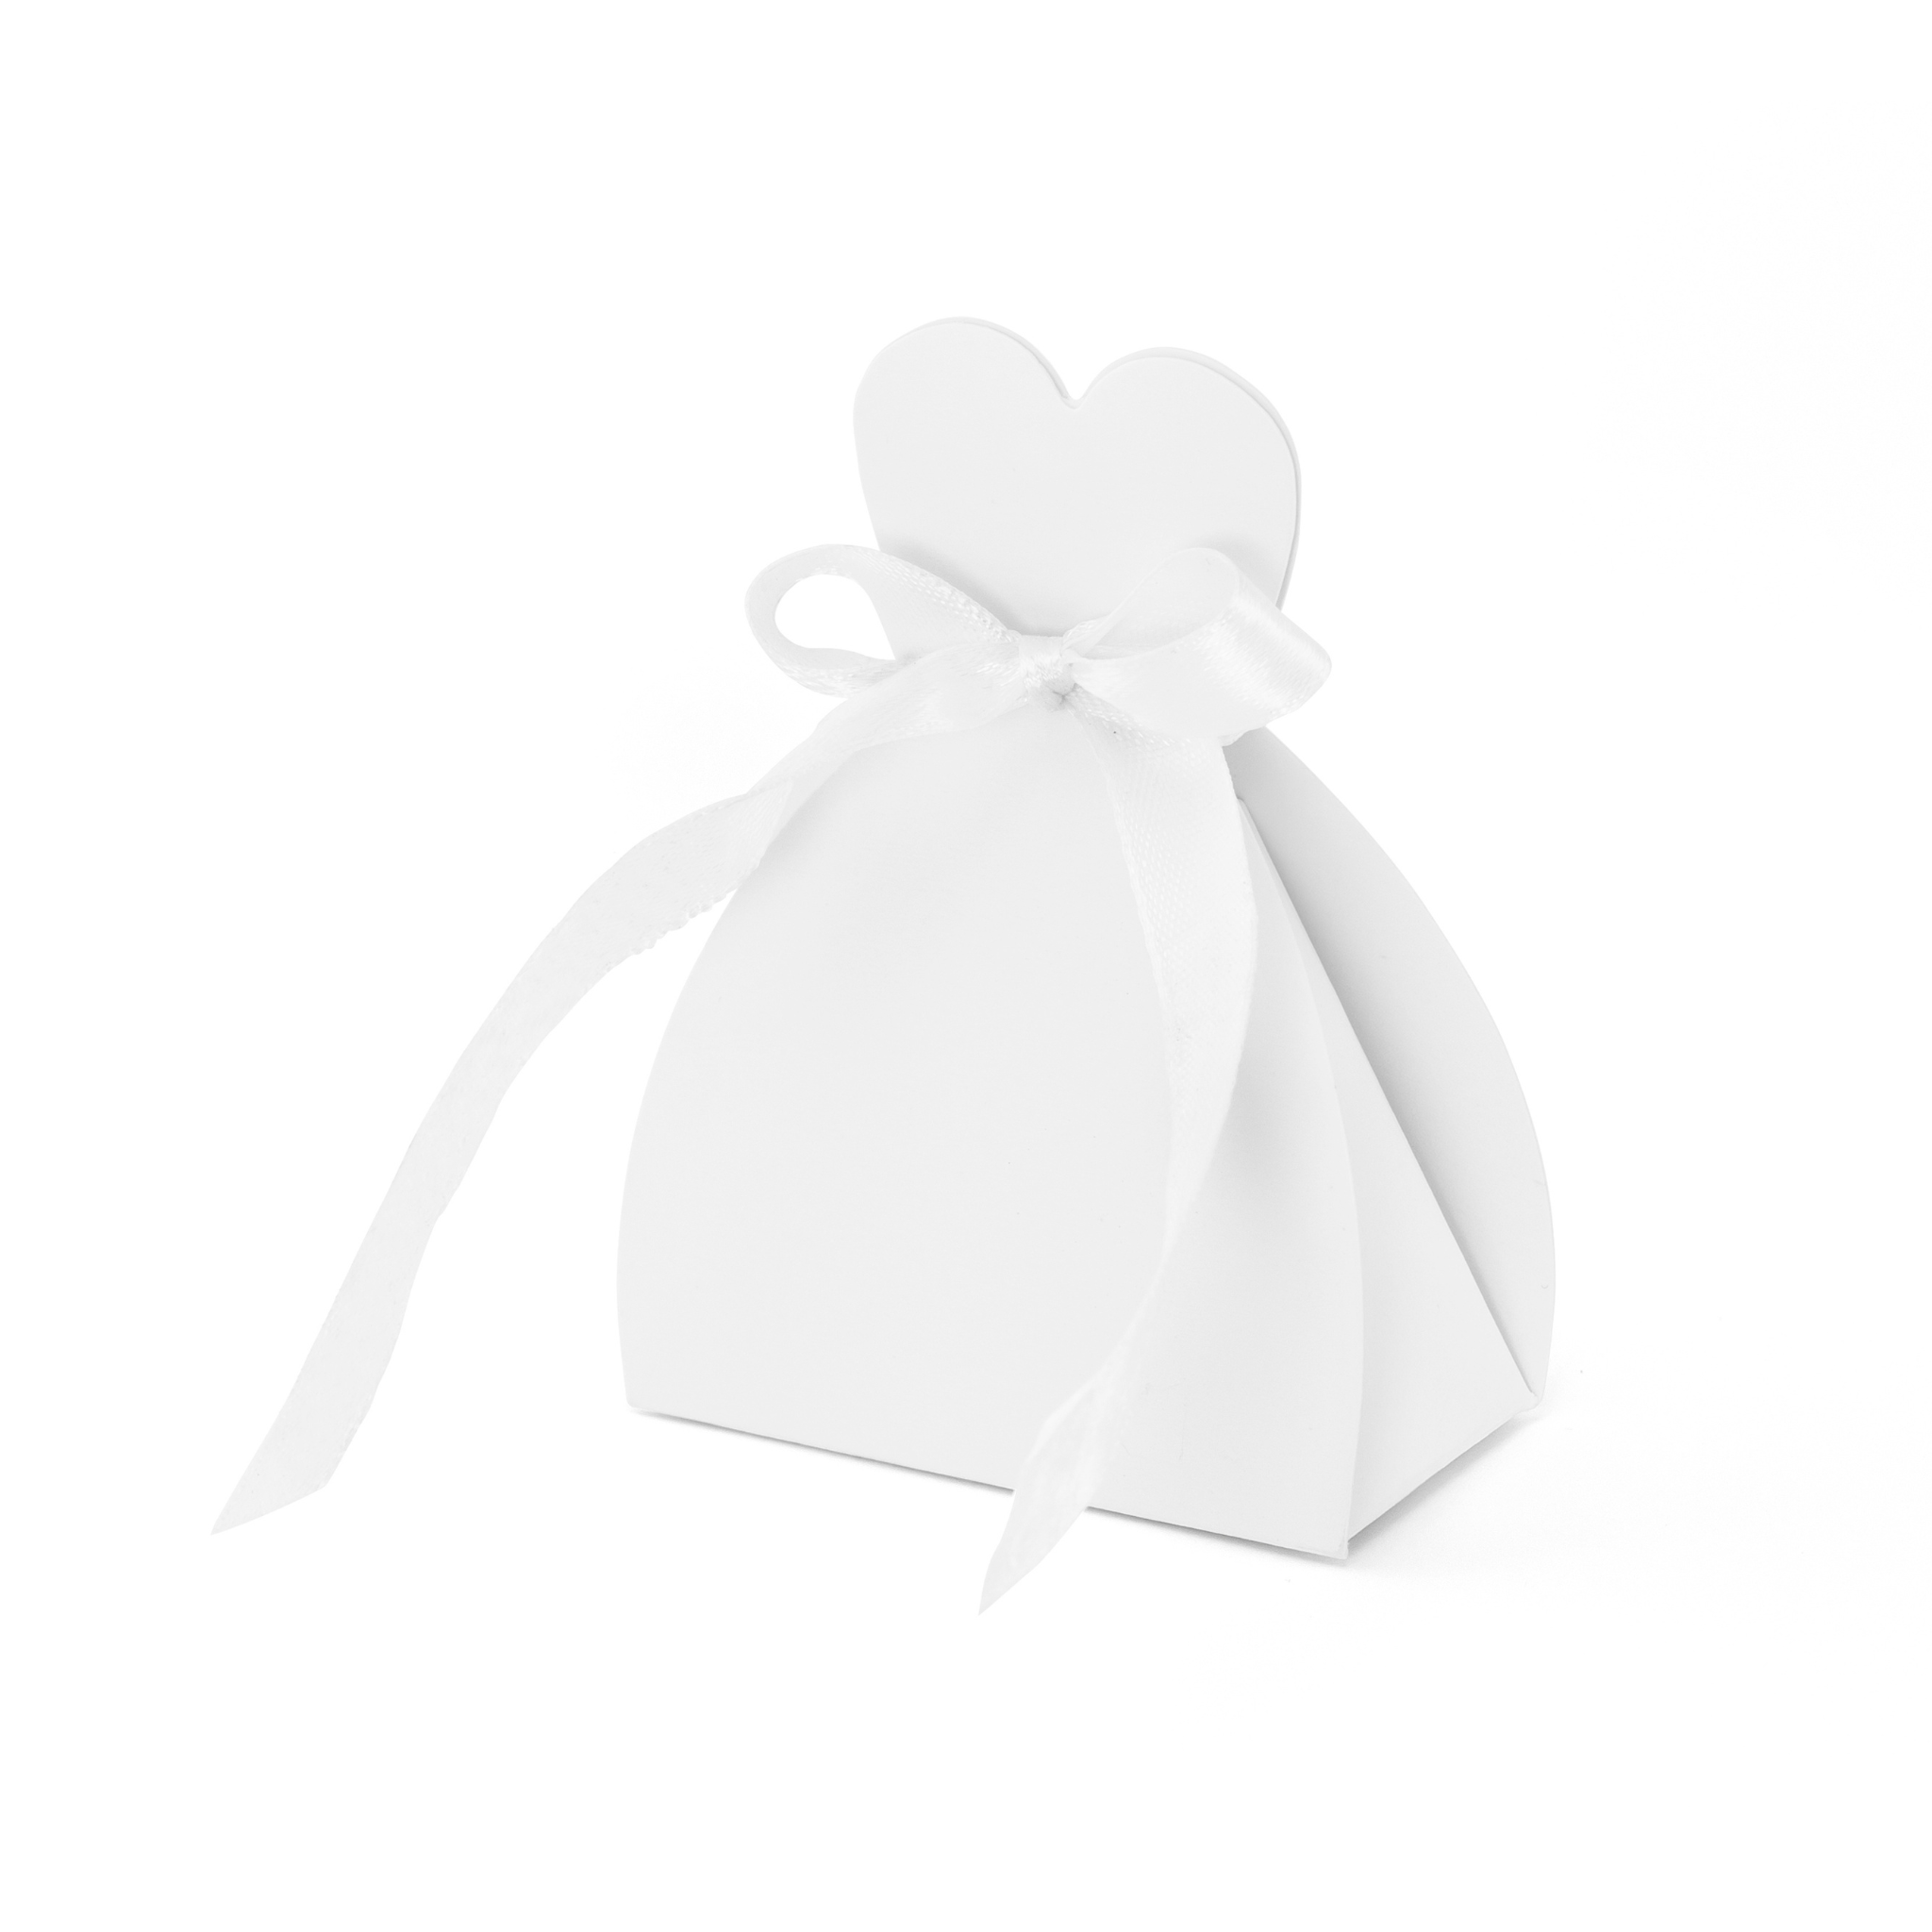 Bride White Gift Boxes Sets